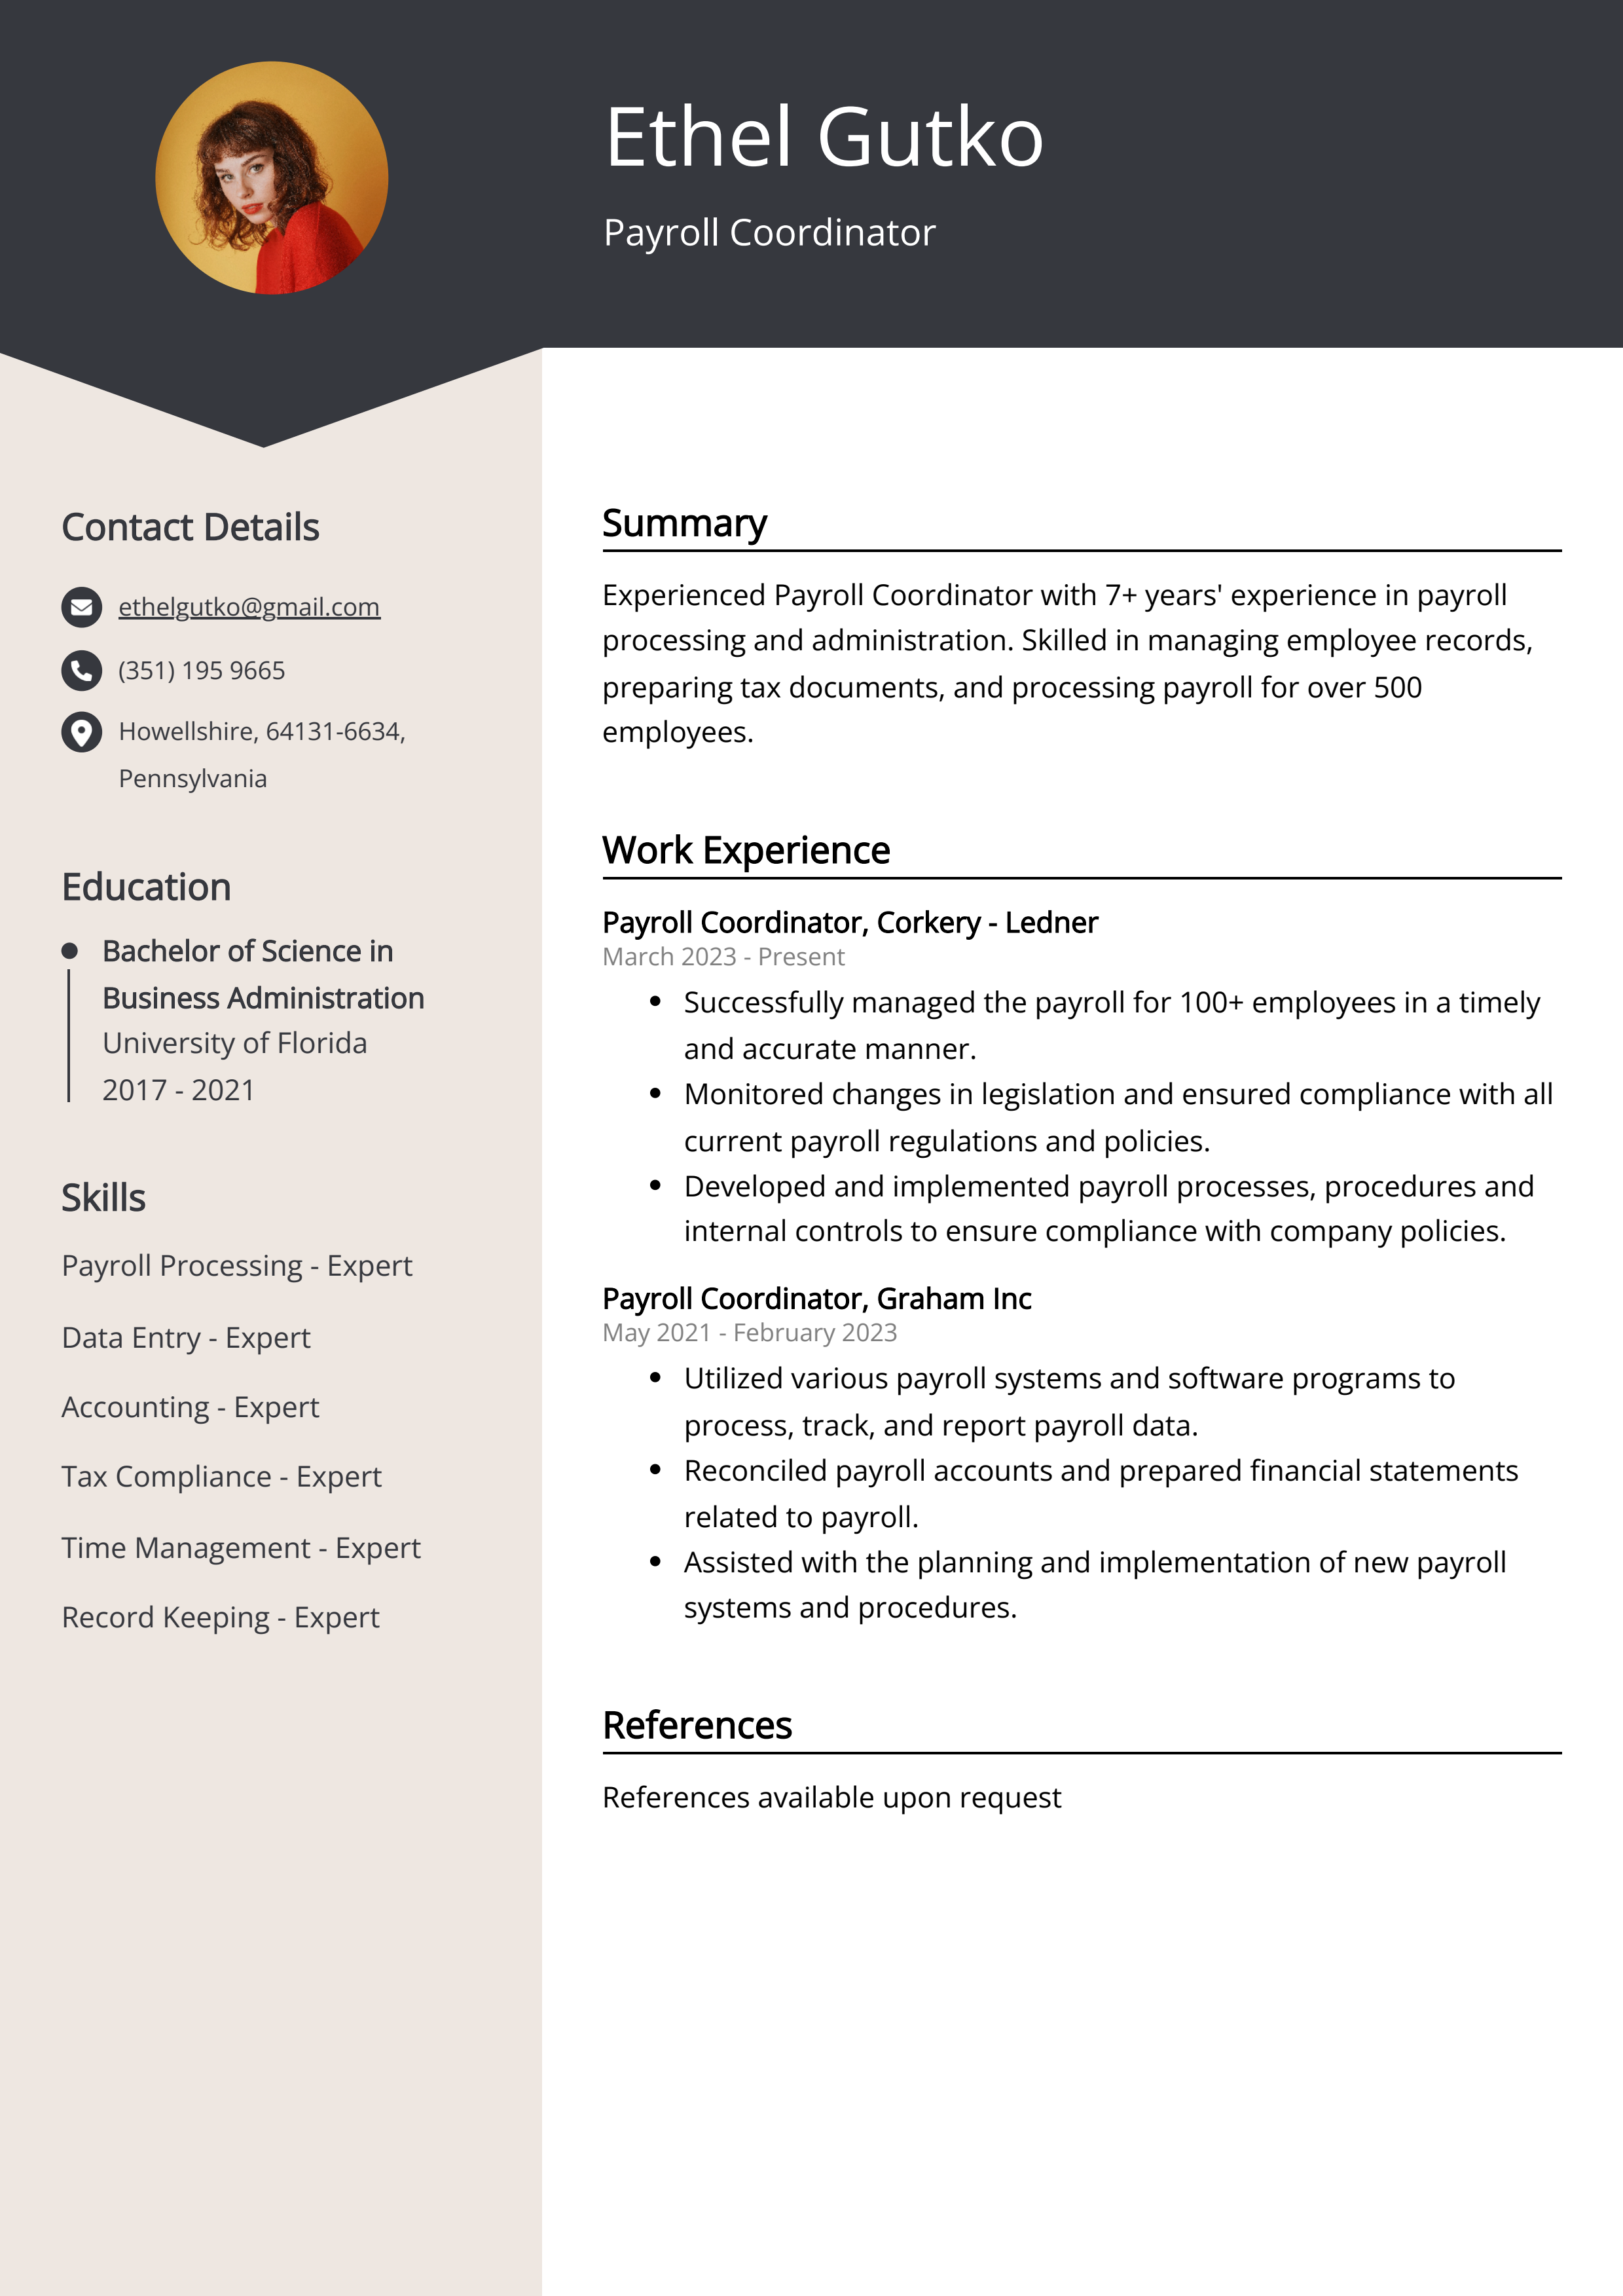 Payroll Coordinator CV Example